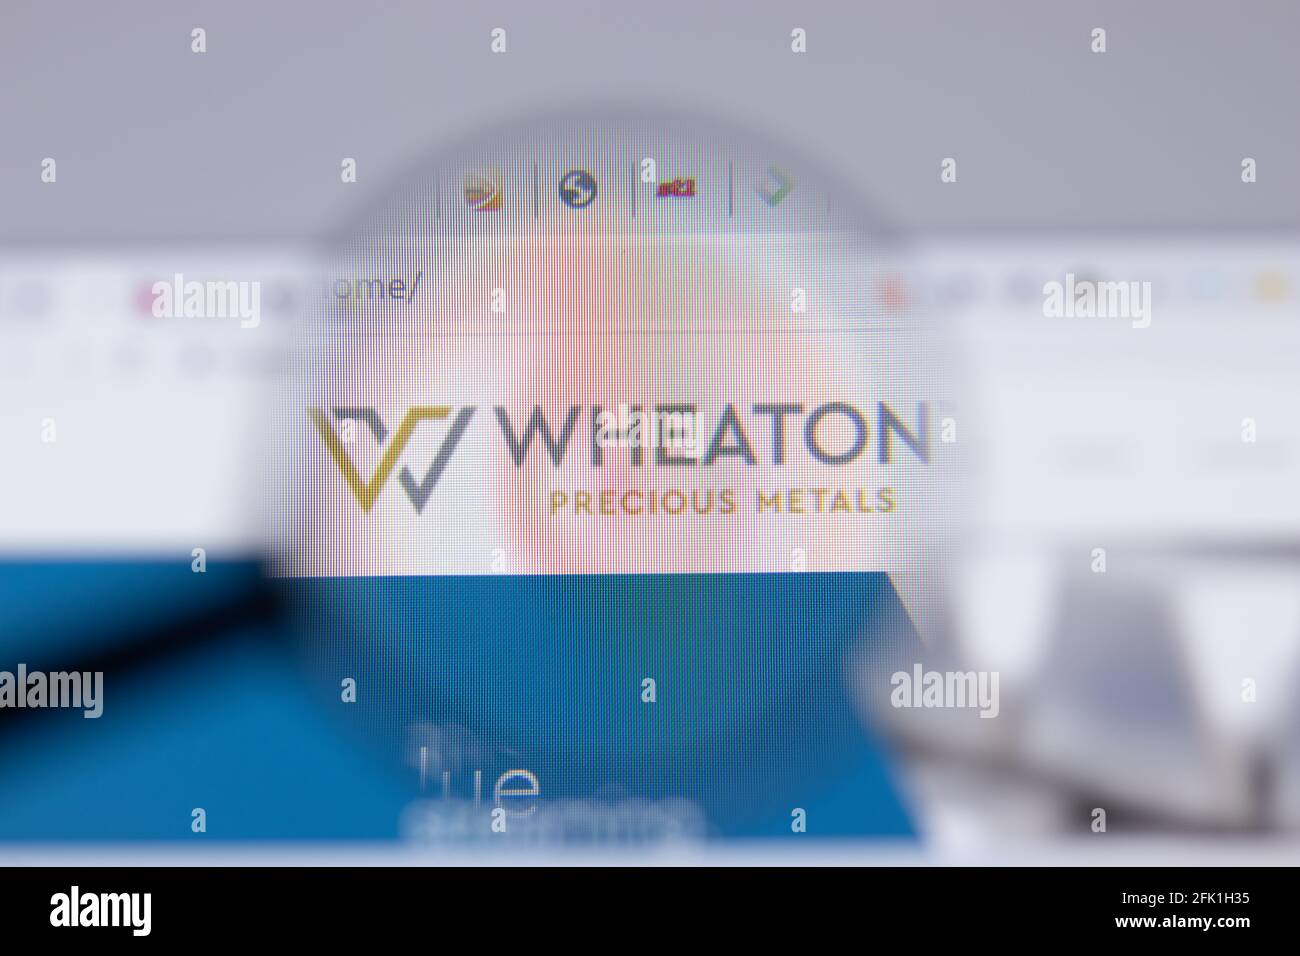 New York, USA - 26. April 2021: Wheaton Precious Metals Logo close-up auf Website-Seite, illustrative Editorial Stockfoto